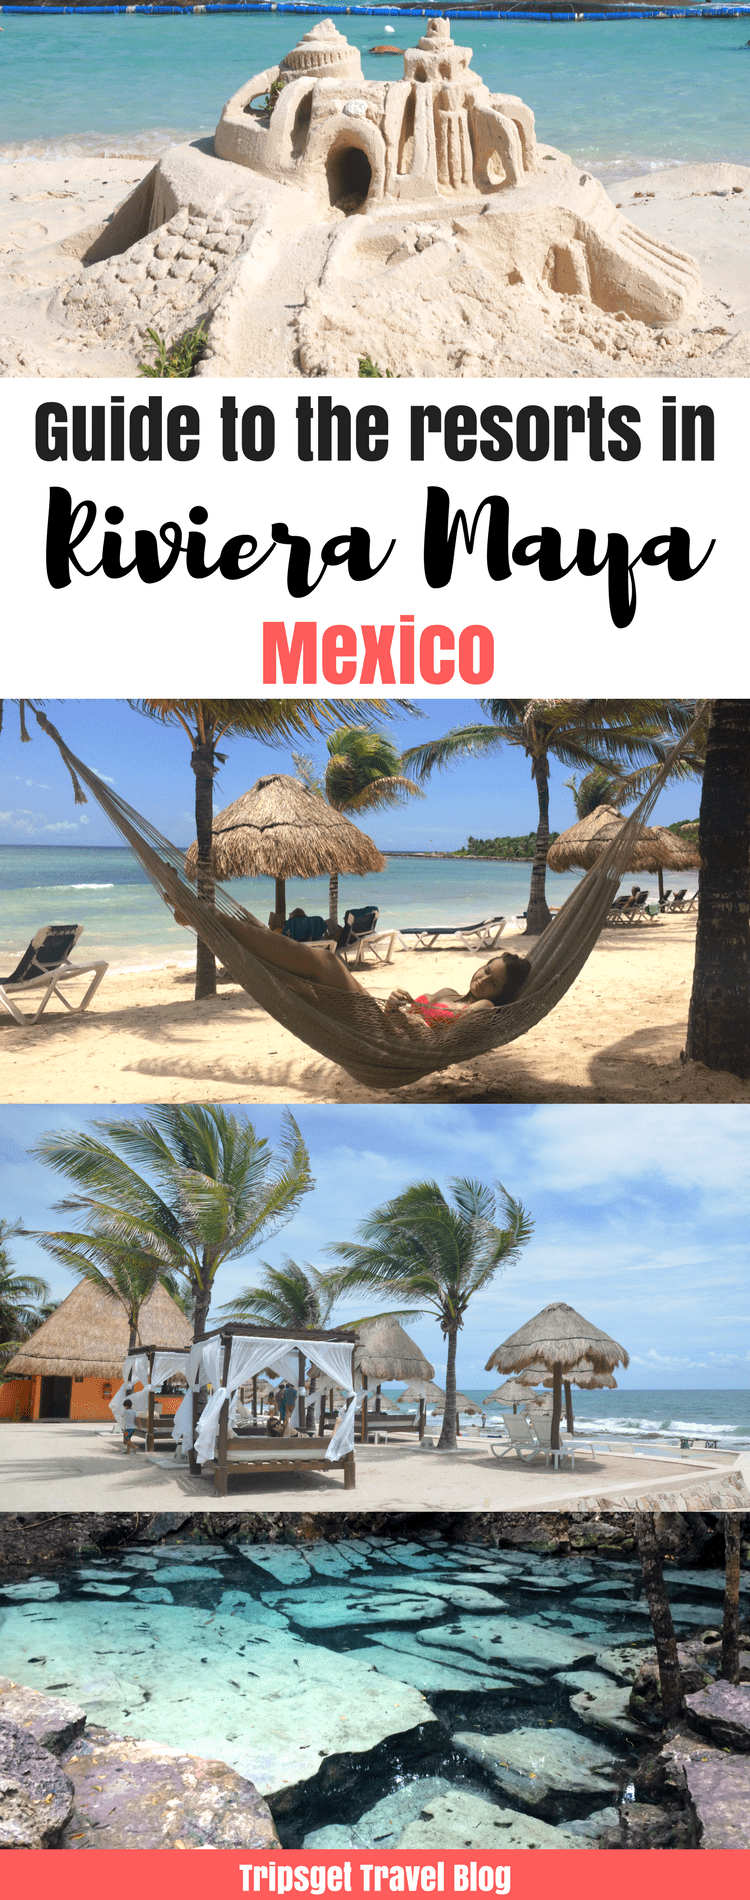 Best hotels in Riviera Maya: guide to the resorts in Riviera Maya, Mexico. Grand Palladium, Secrets, Unico, Hard Rock Hotel Riviera Maya. Where to stay in Riviera Maya. Puerto Morelos, Akumal, Playa del Carmen, Tulum.